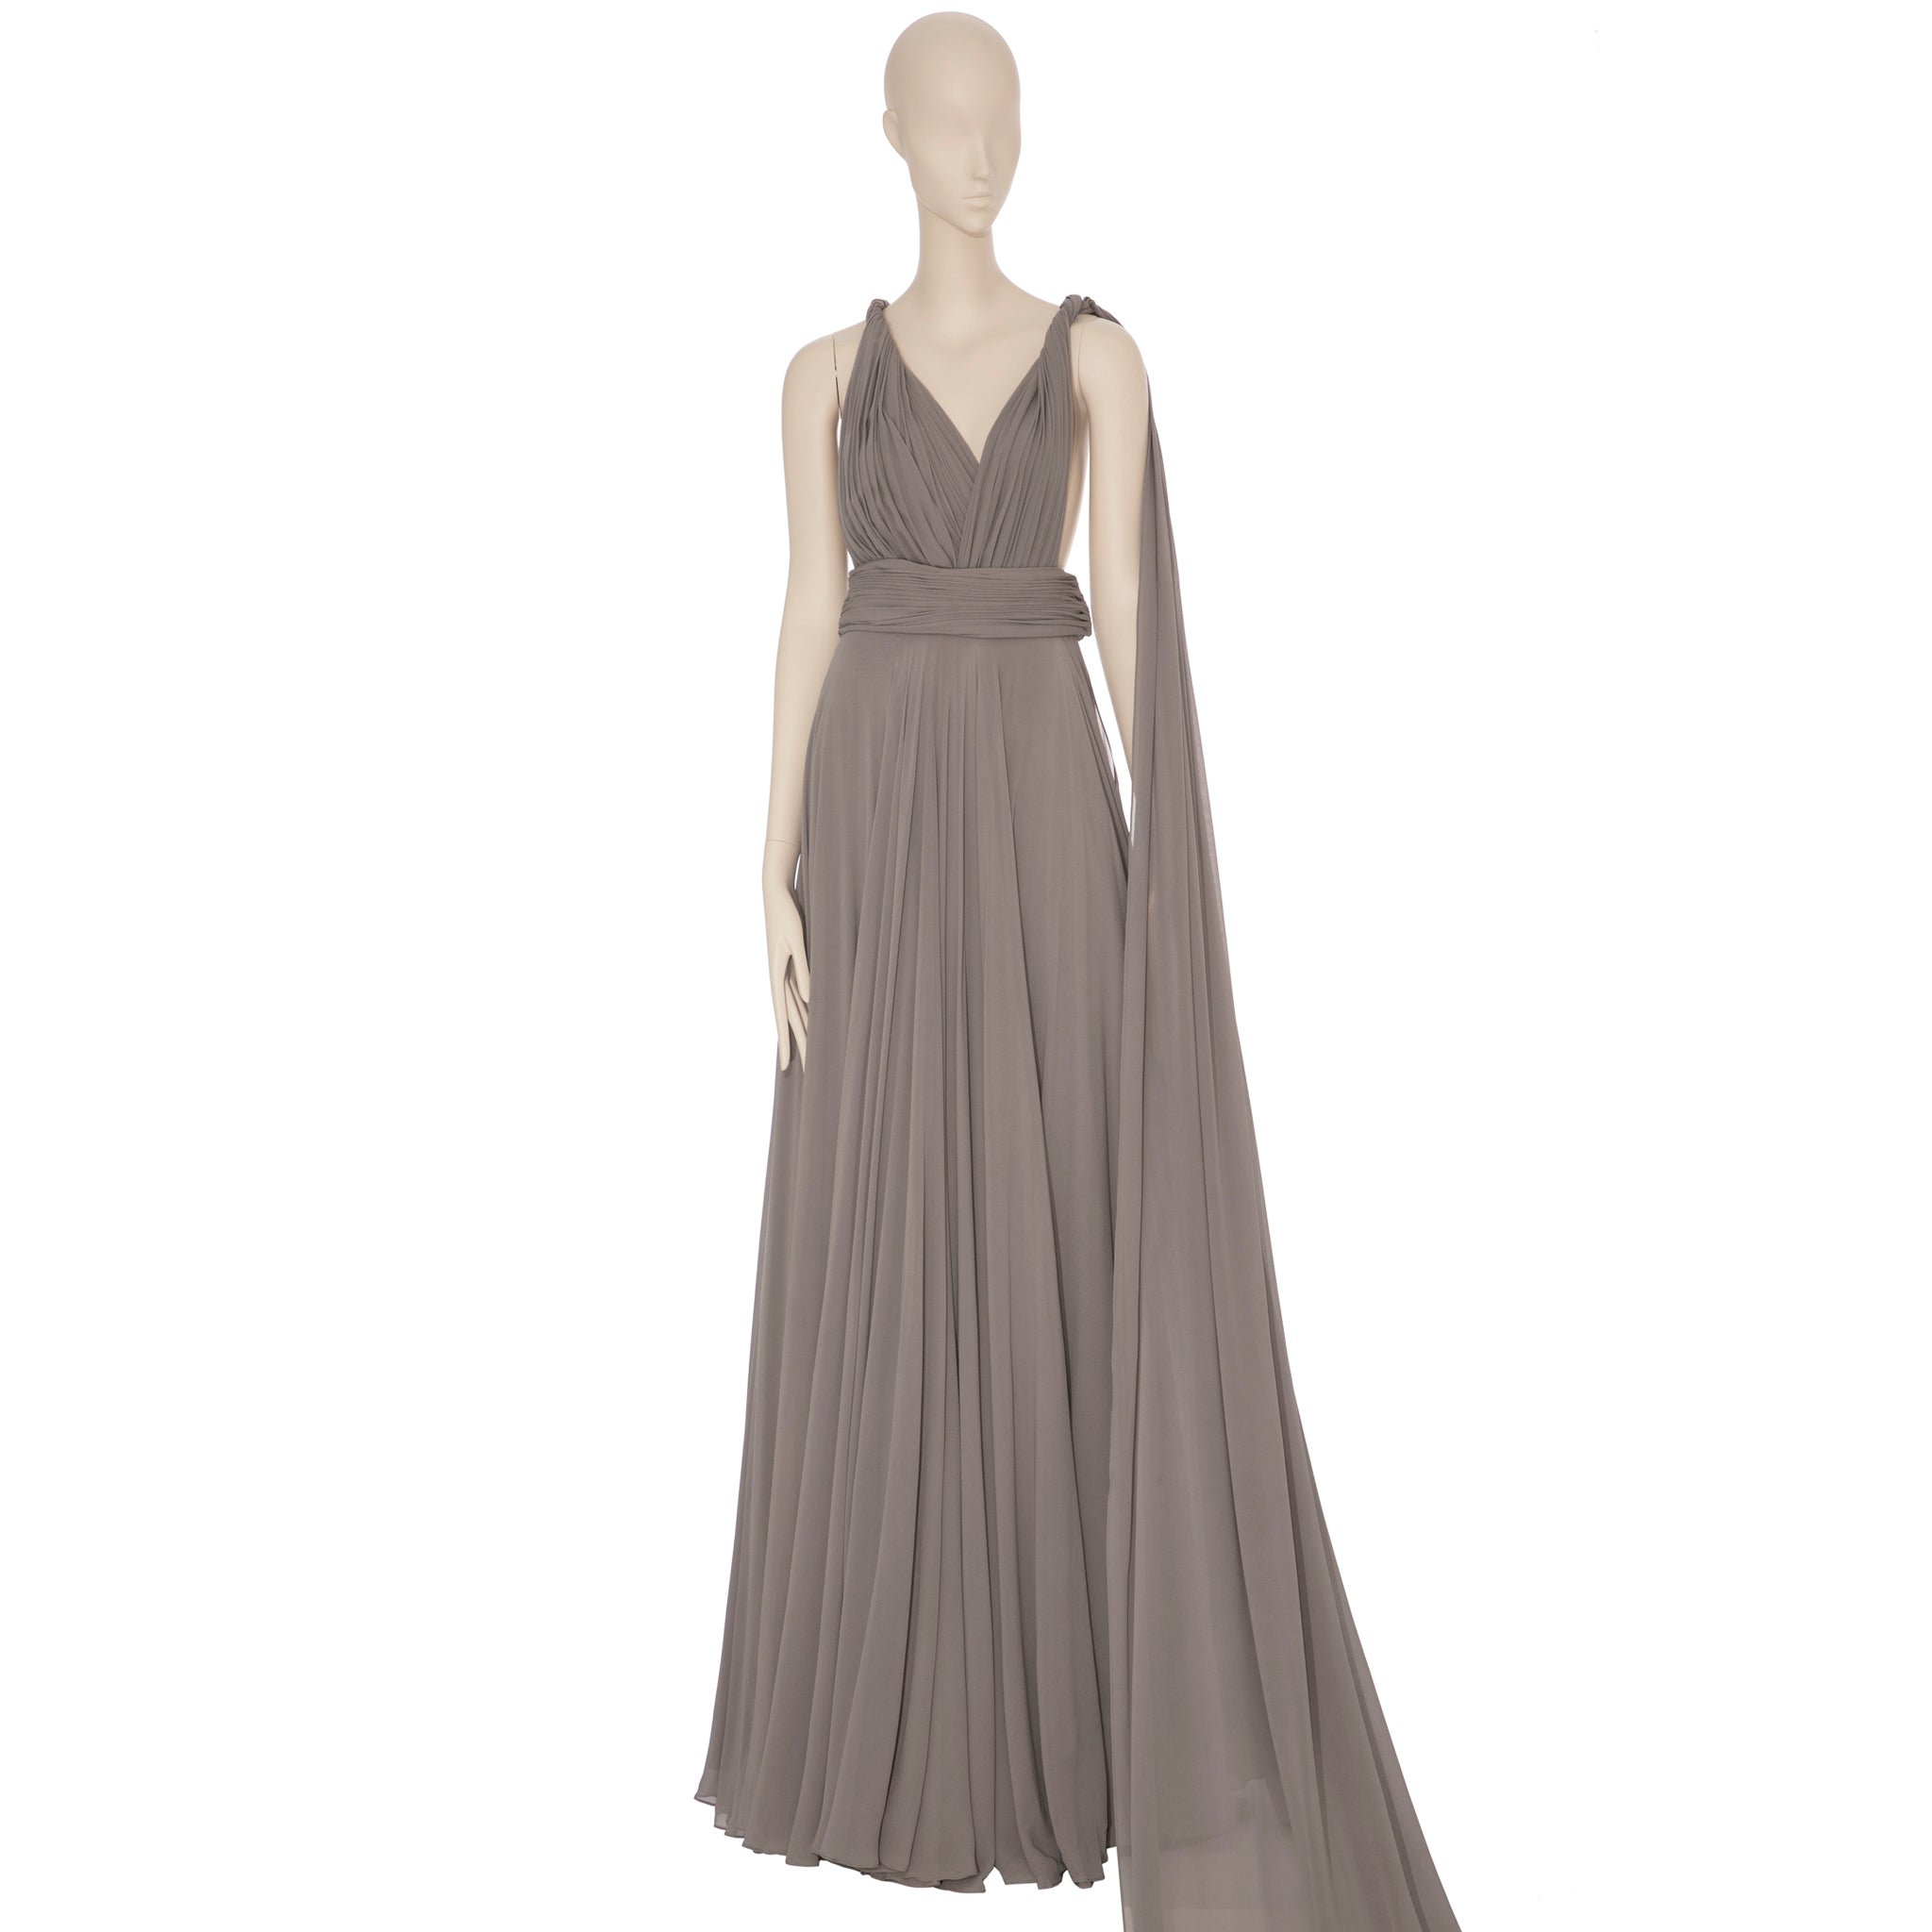 Yves Saint Laurent Couture Grey Evening Dress 36 FR